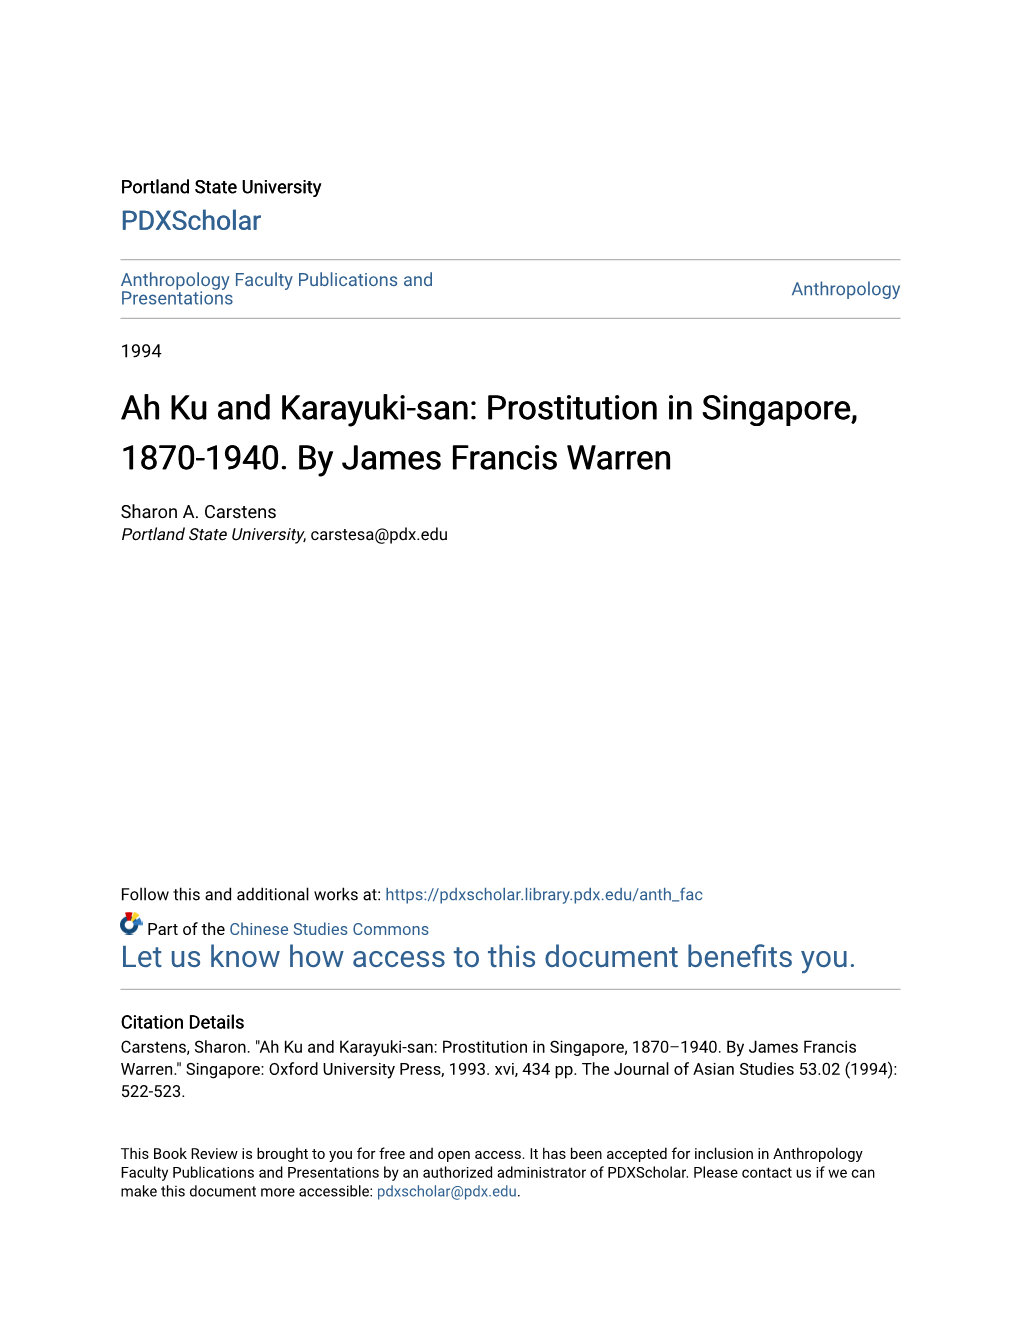 Ah Ku and Karayuki-San: Prostitution in Singapore, 1870-1940. by James Francis Warren